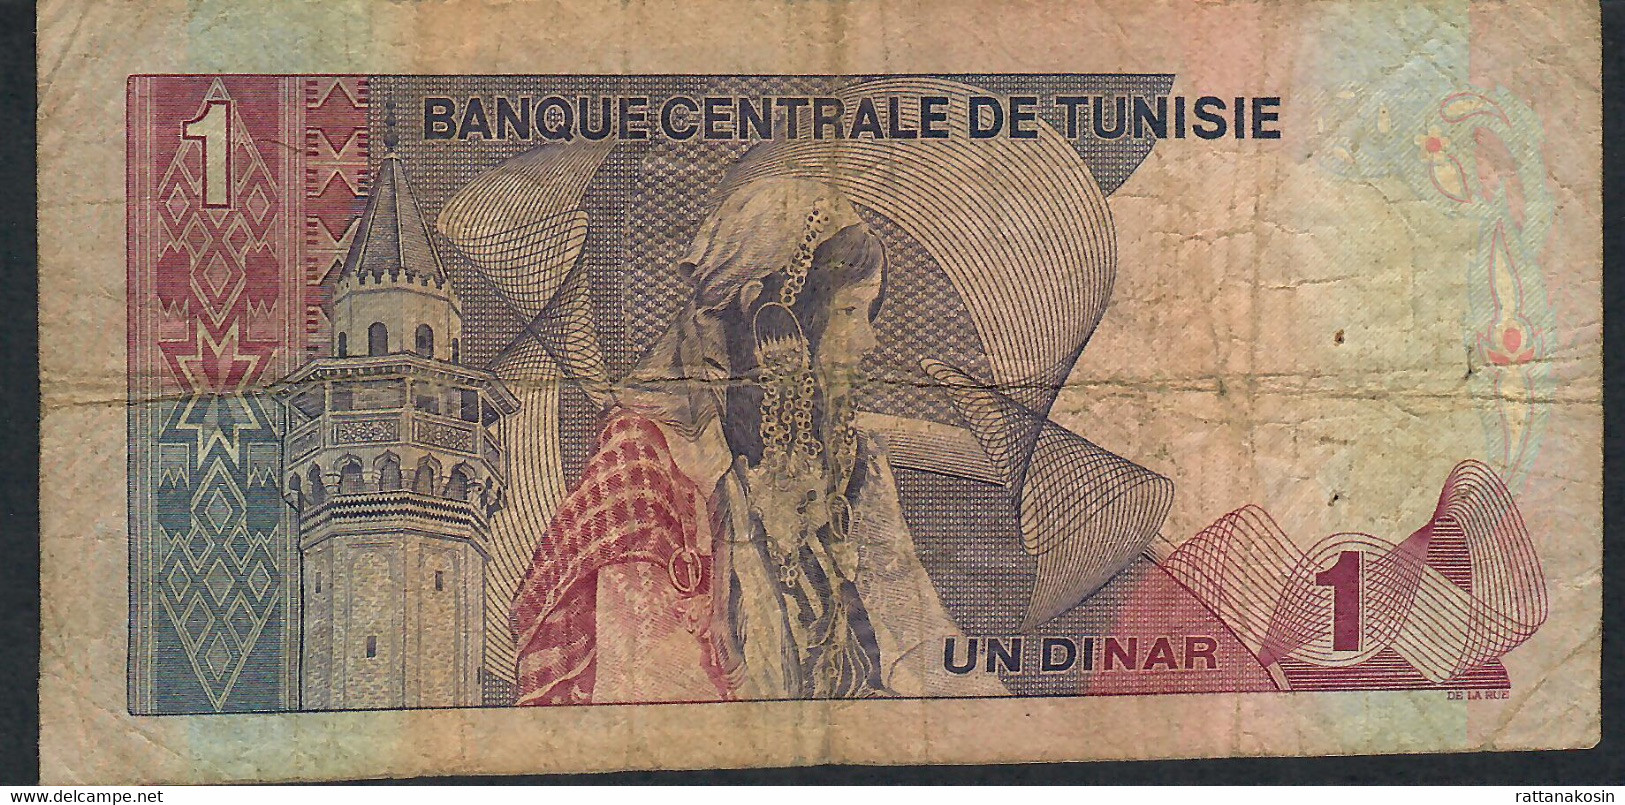 TUNISIA P67 1 DINAR 1972  #B/1  FINE - Tunisie